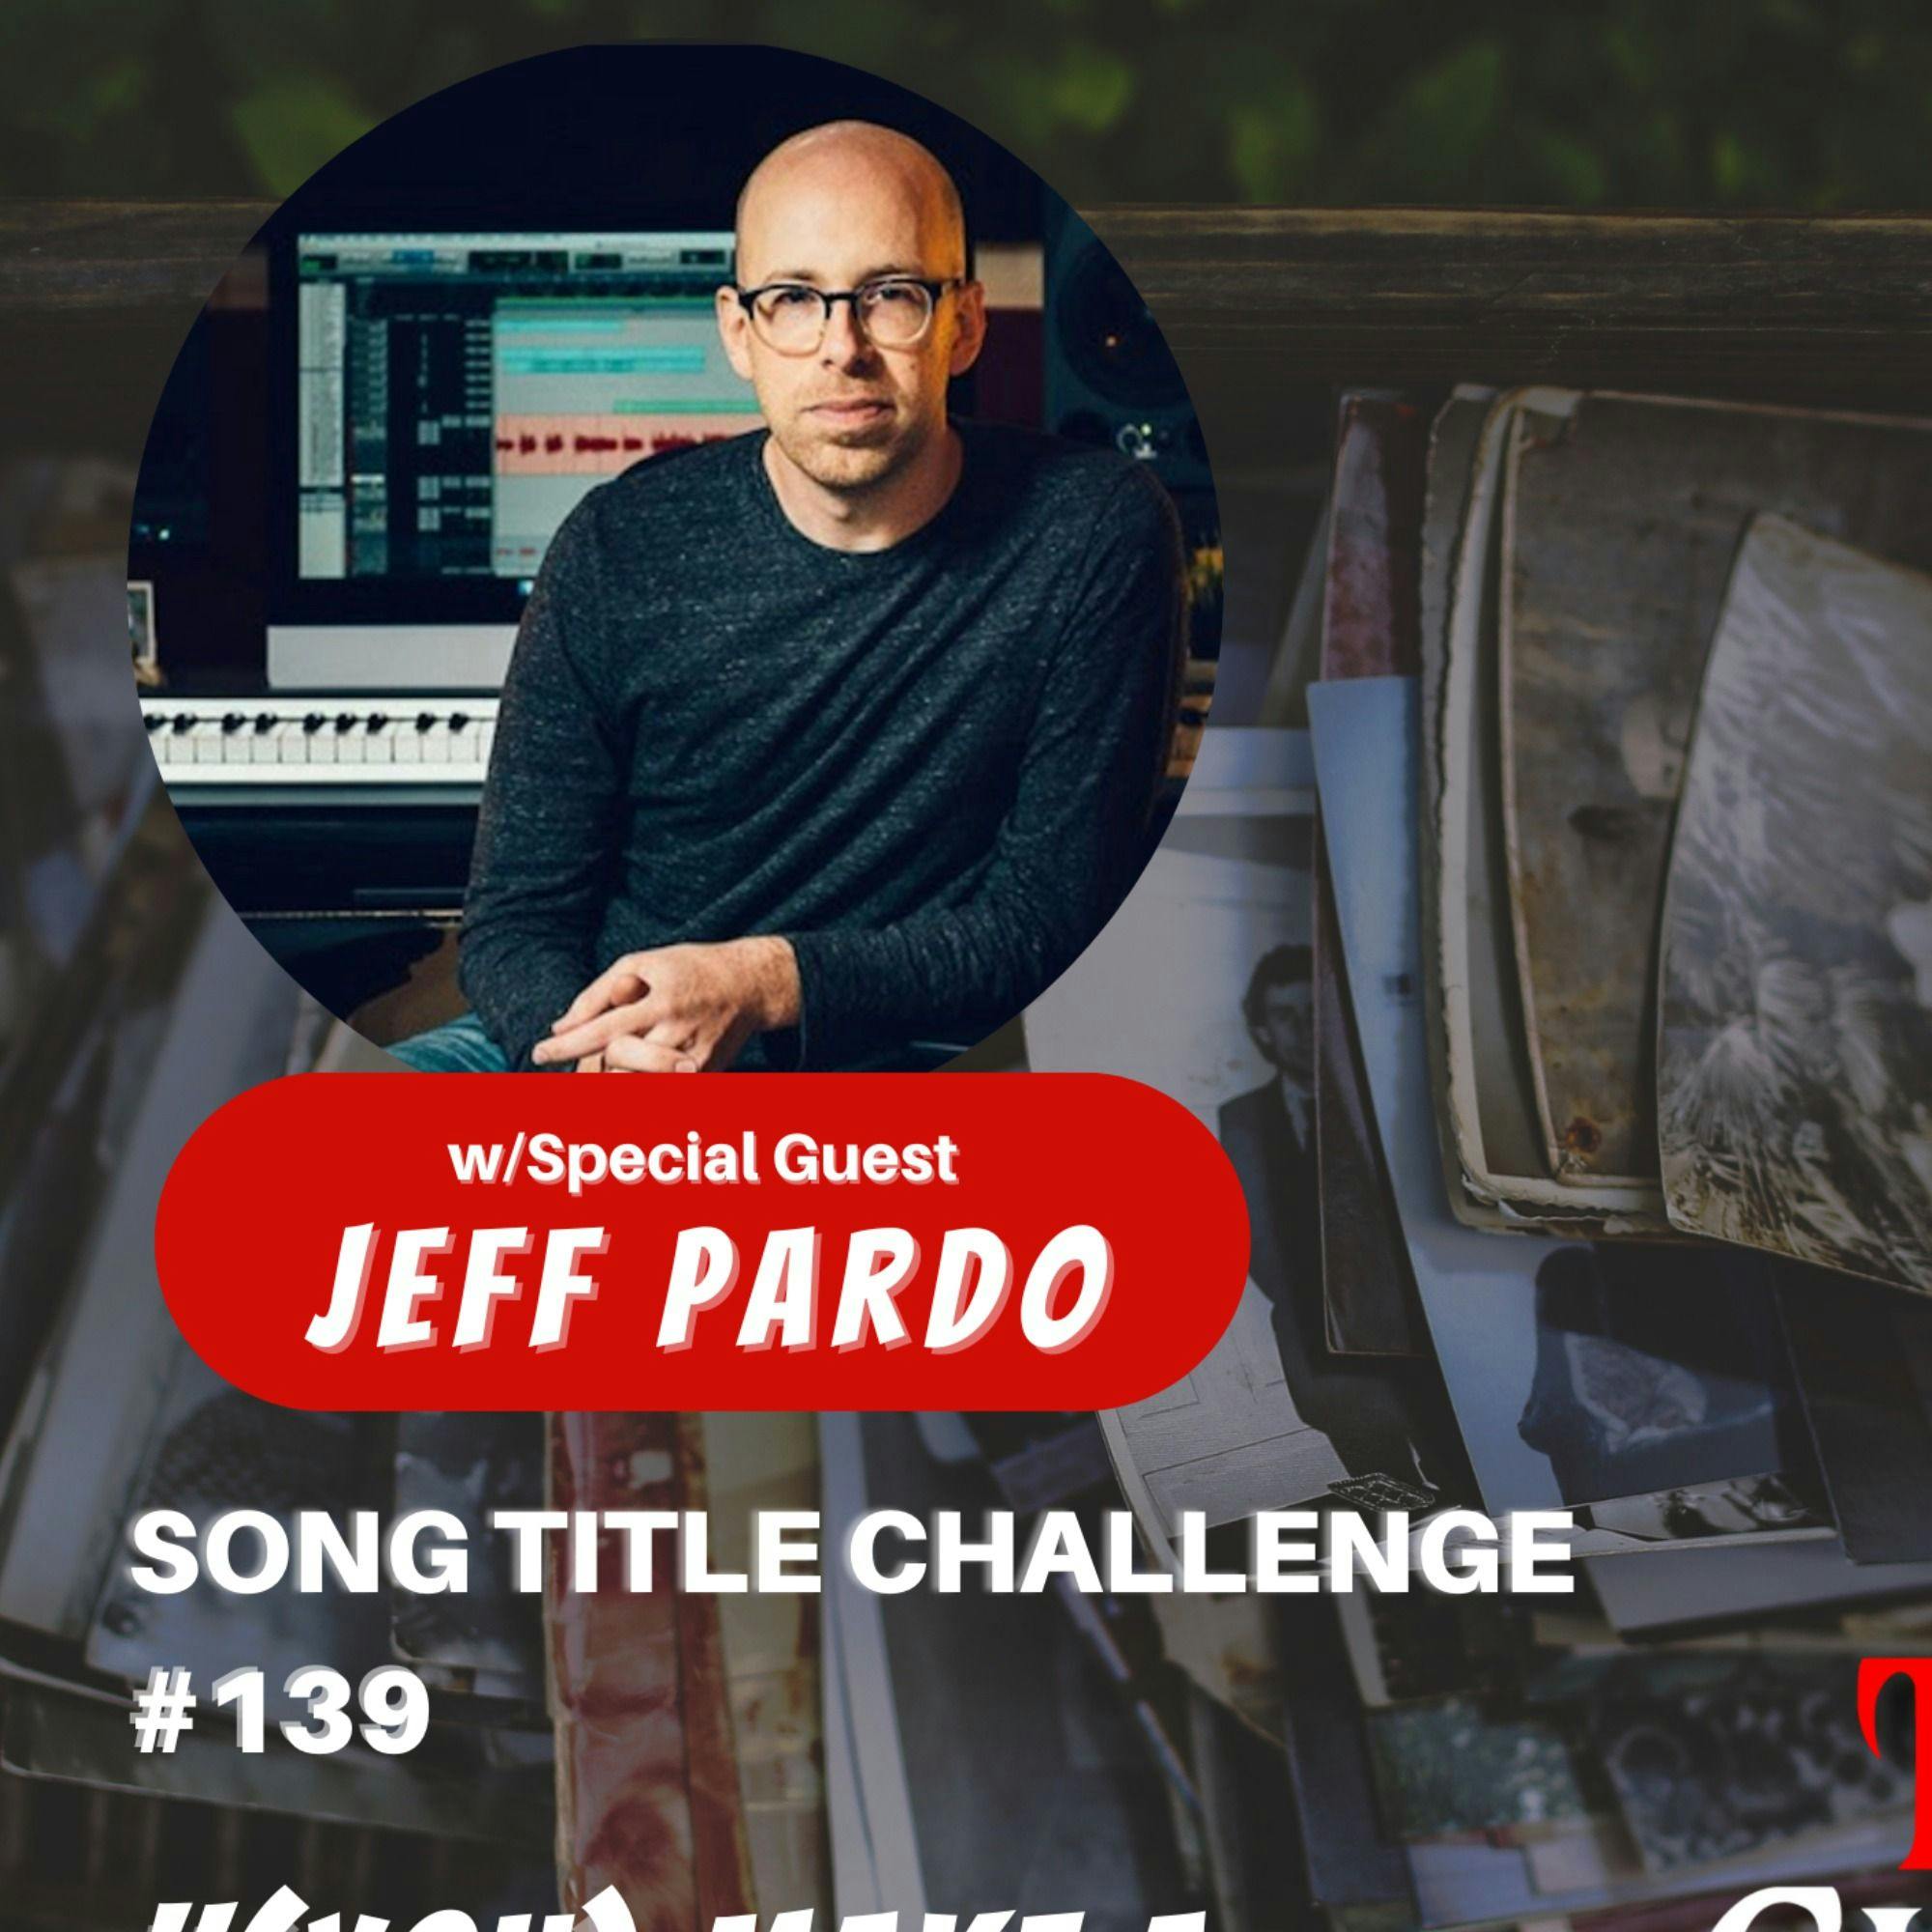 Song Title Challenge #139: ”You Make A Good Memory” w/ Jeff Pardo